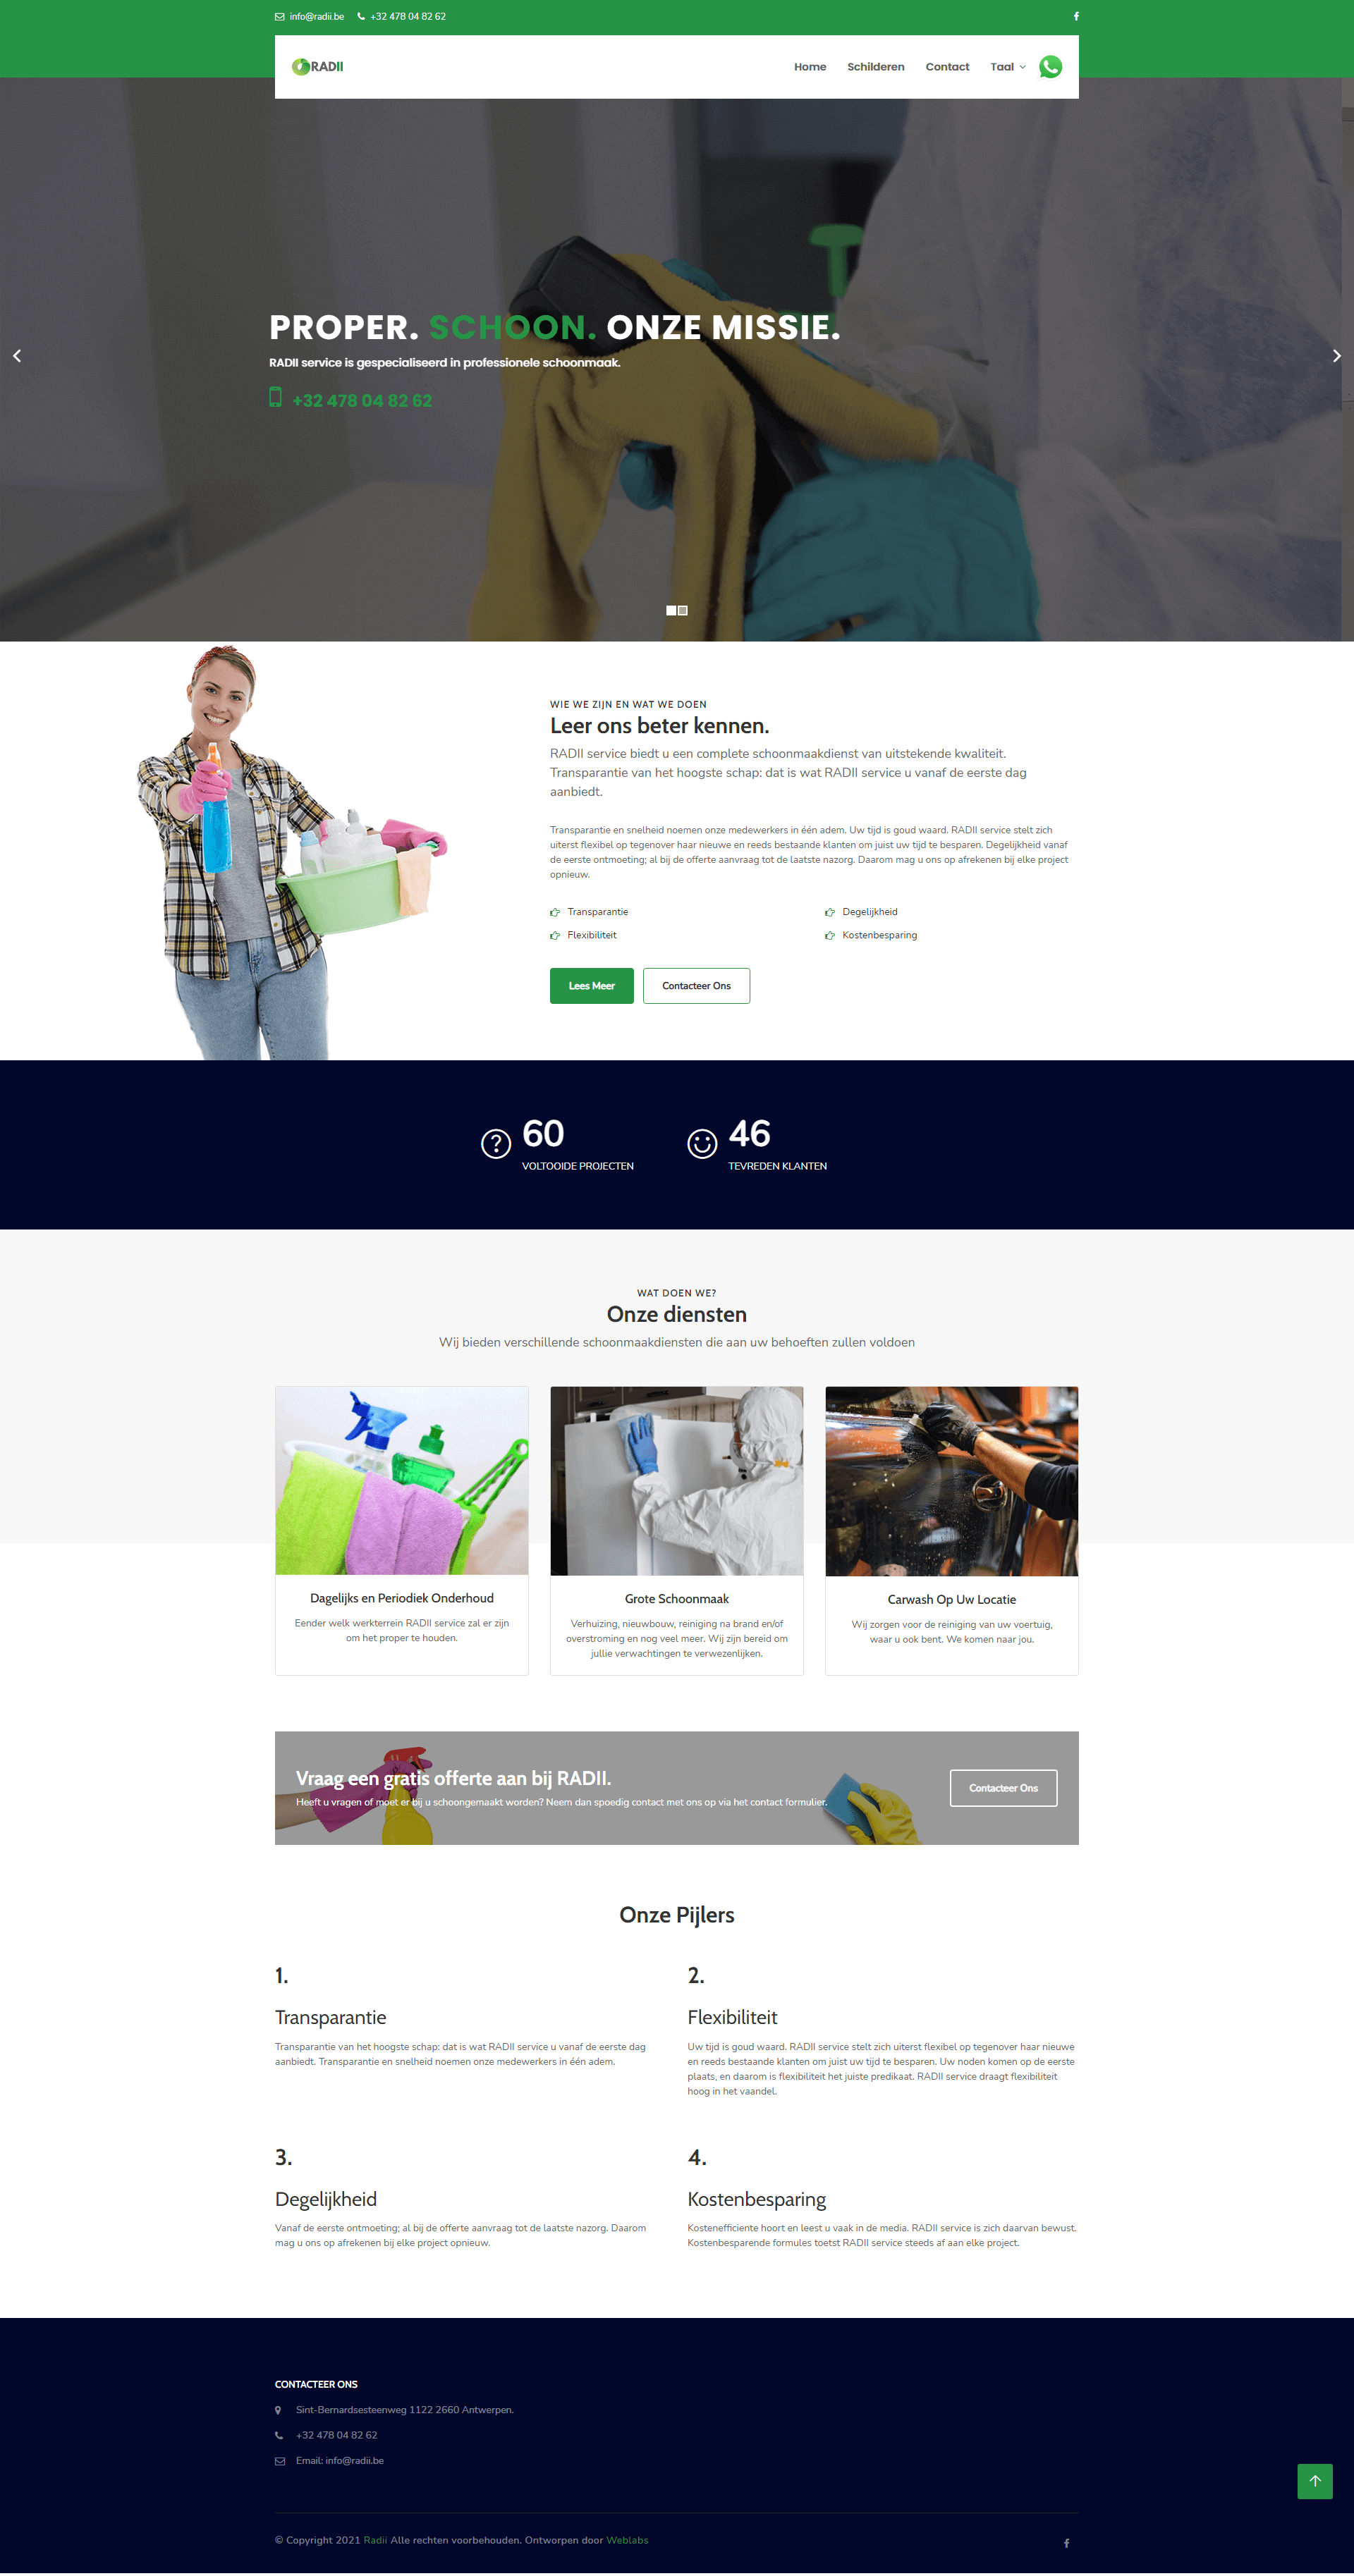 Full website screenshot of a client website named Radii